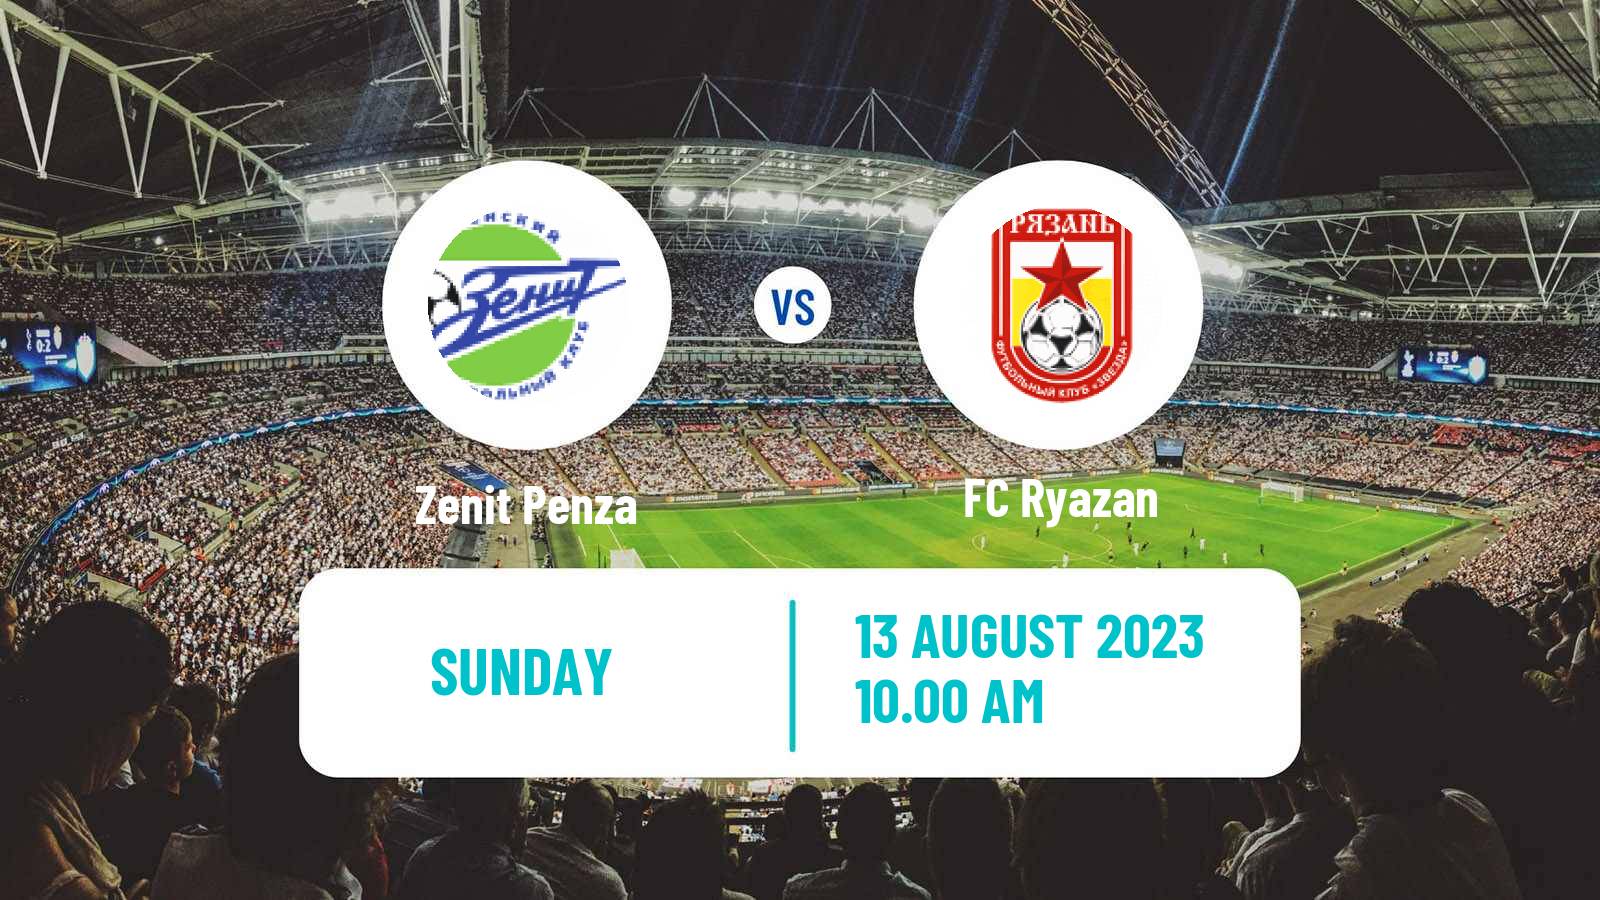 Soccer FNL 2 Division B Group 3 Zenit Penza - Ryazan